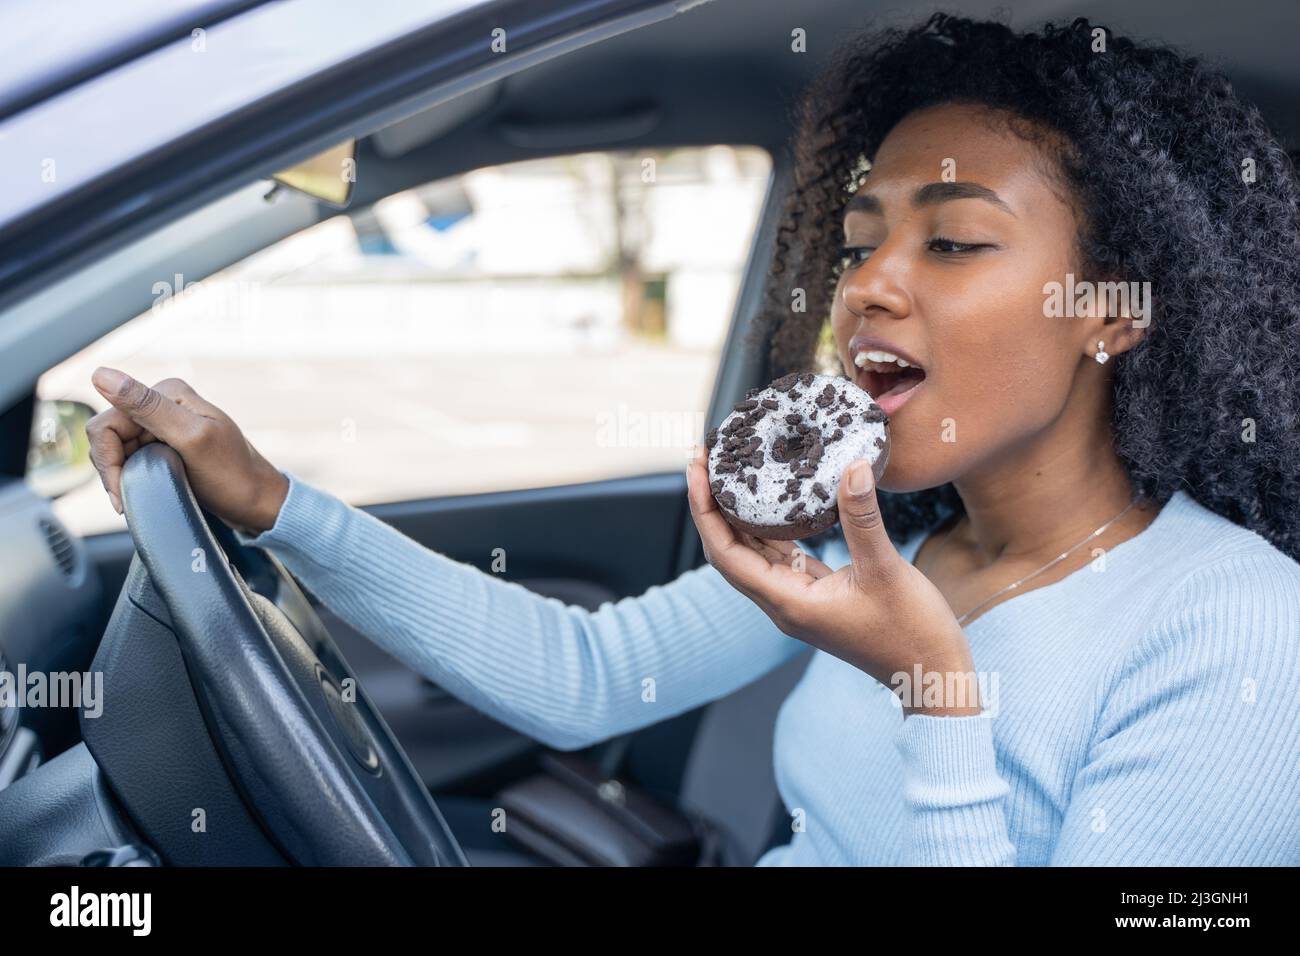 One black woman smiling eating a doughnut Stock Photo